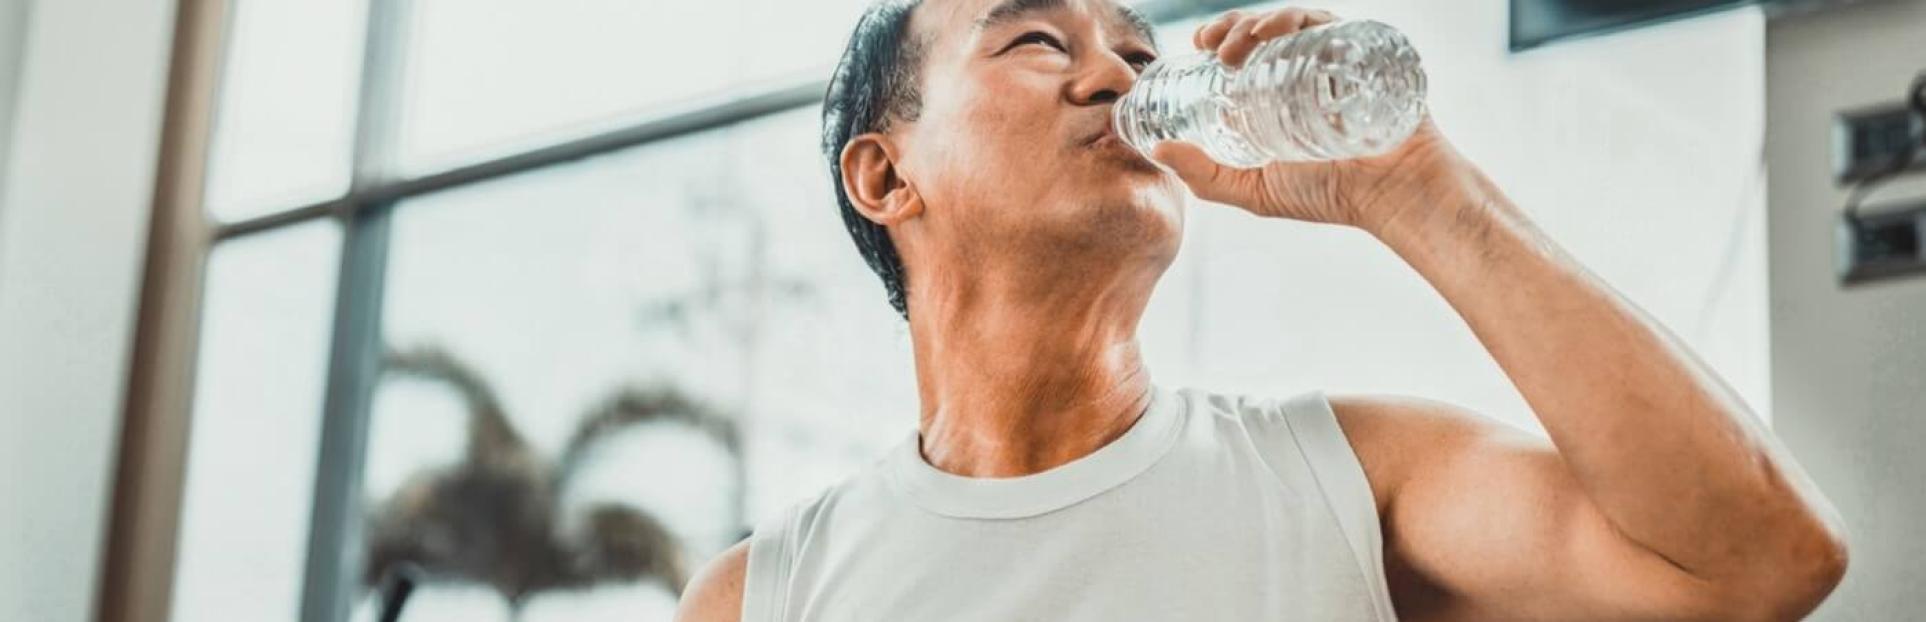 man drinking water in gym